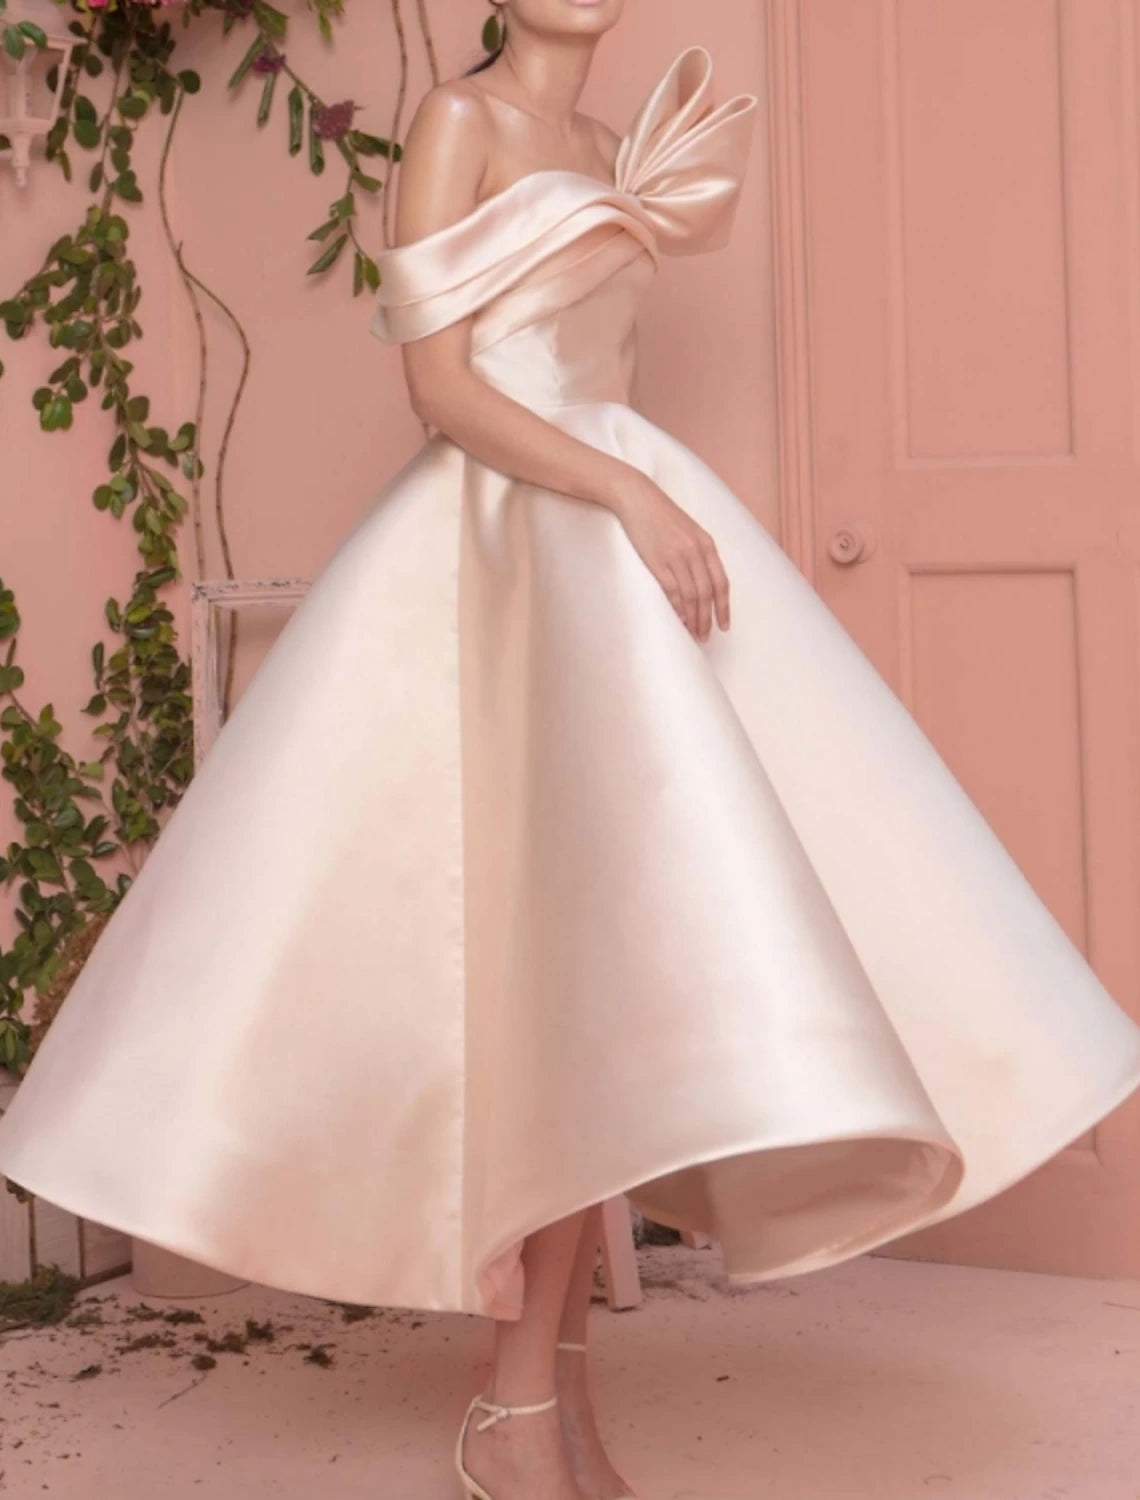 A-Line Minimalist Elegant Engagement Prom Valentine's Day Dress Off Shoulder Short Sleeve Ankle Length Satin with Sleek